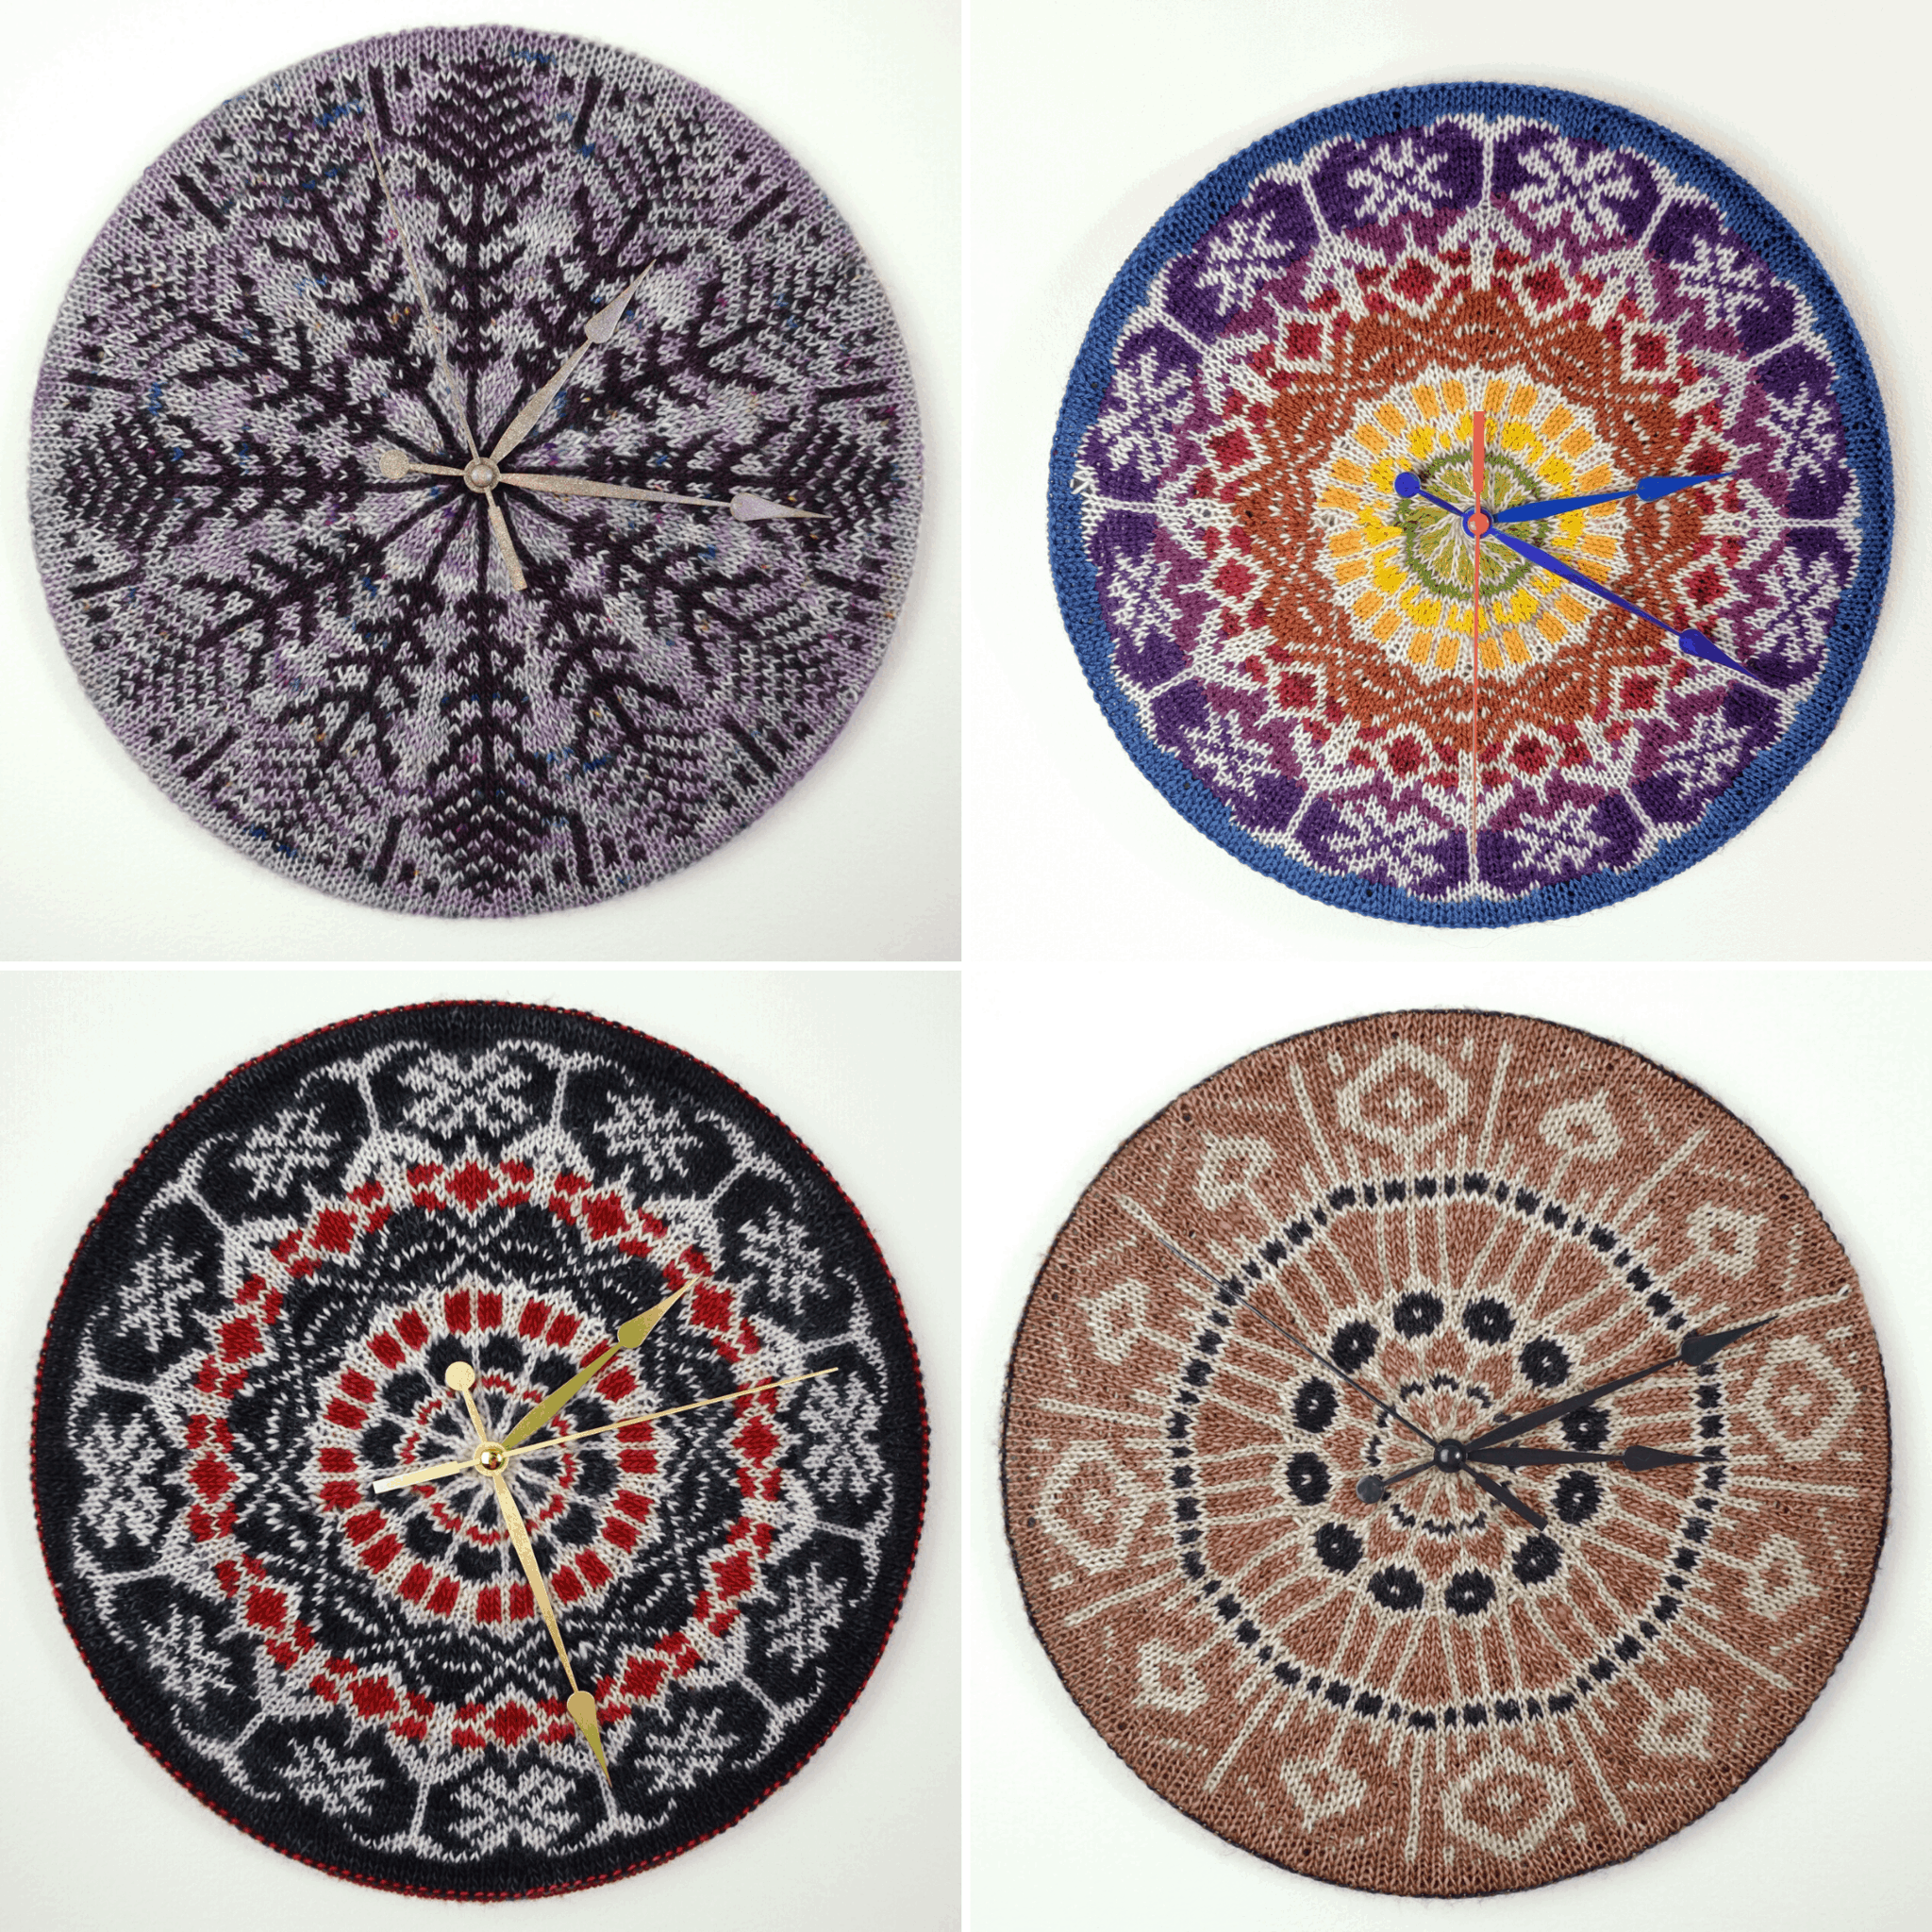 Circular knitted colorwork clocks.